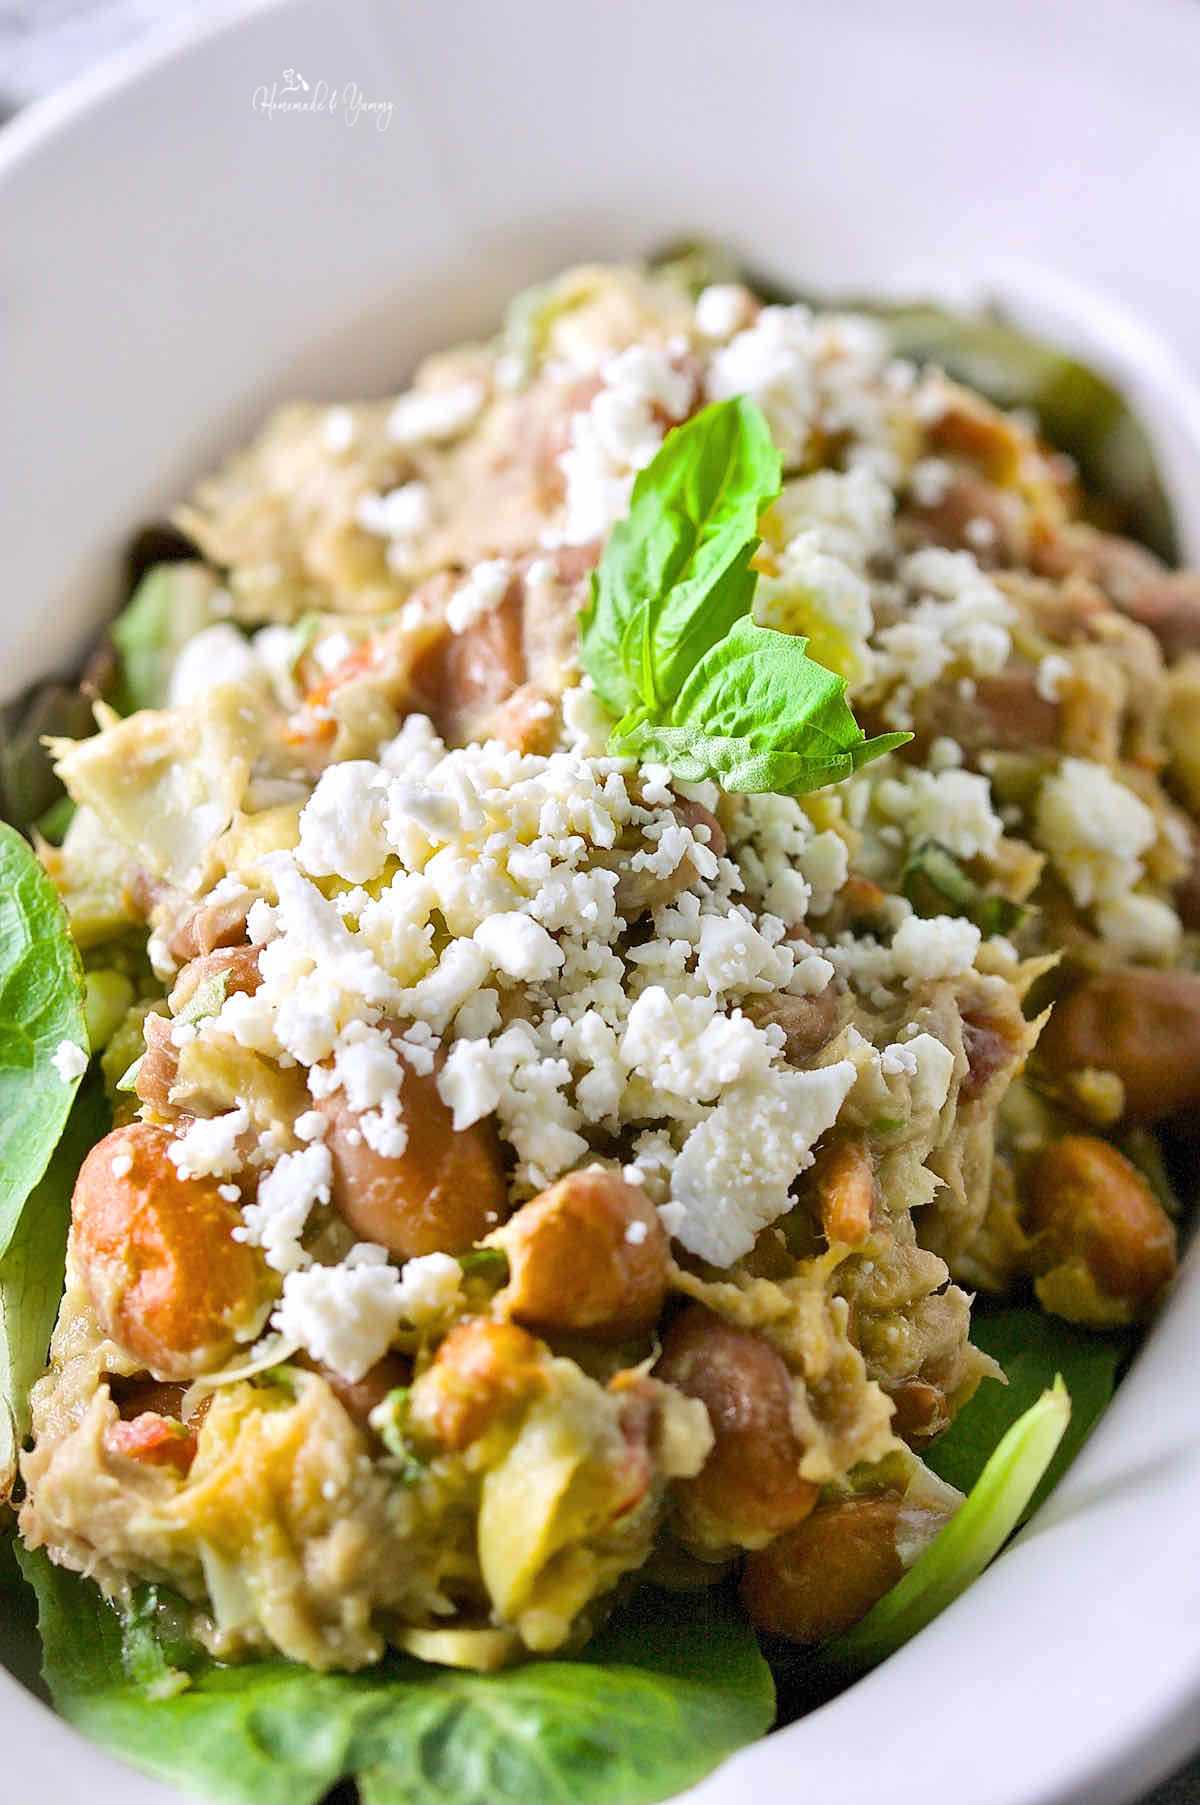 Italian tuna salad with beans and avocado.